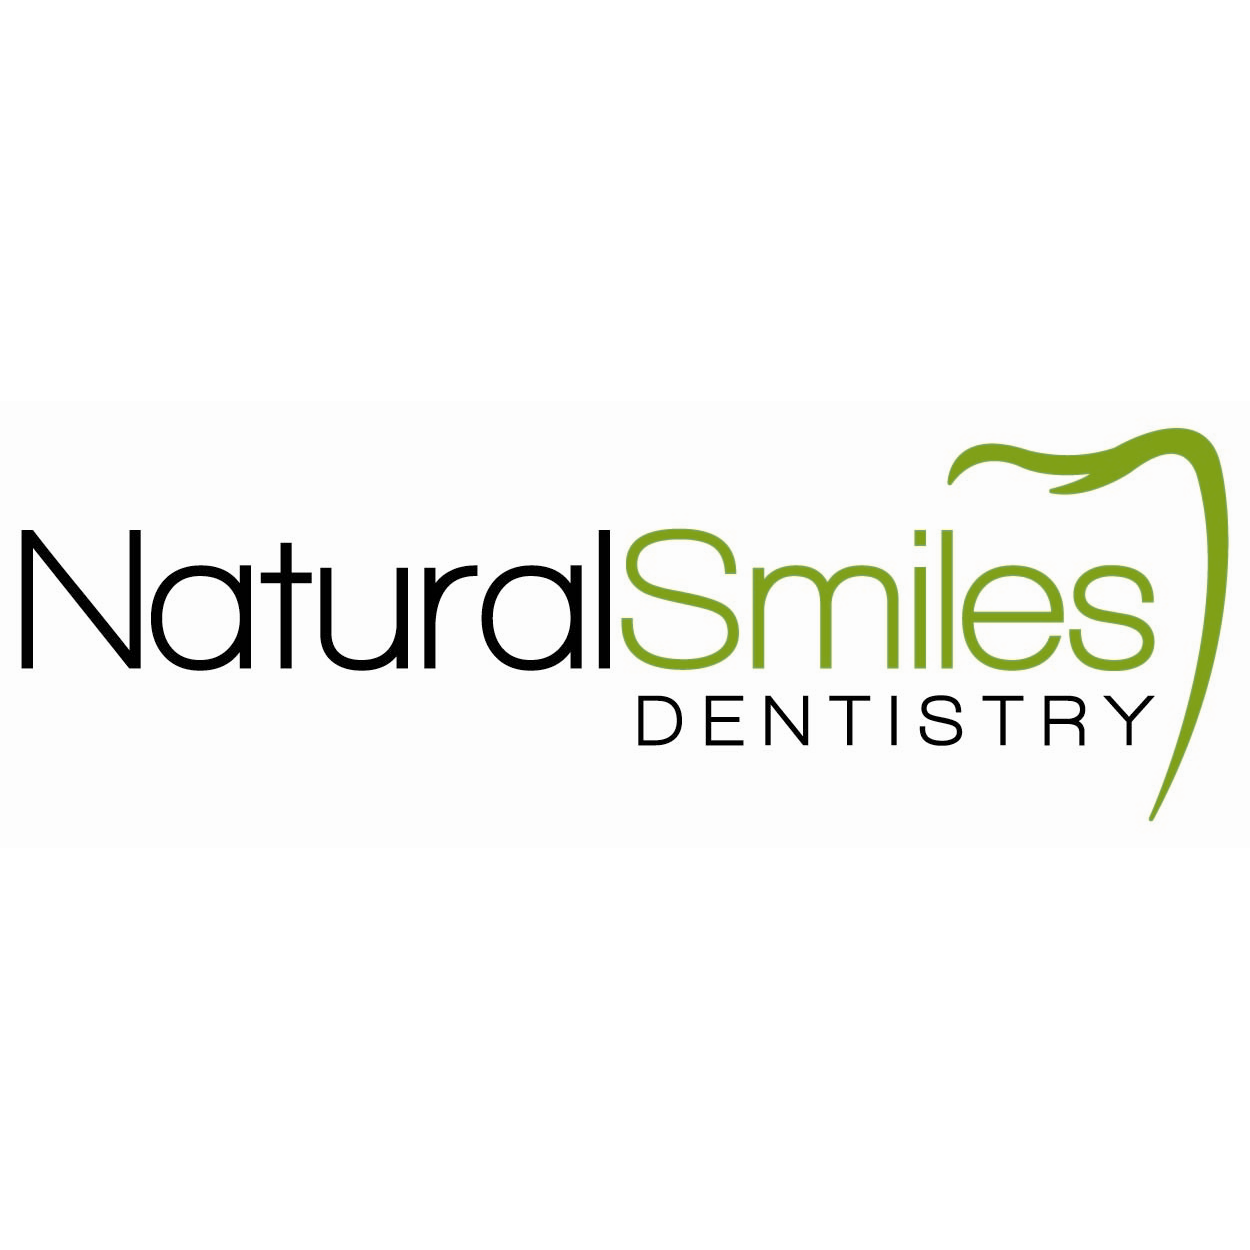 Natural Smiles Dentistry - Salt Lake City, UT 84109 - (801)463-6657 | ShowMeLocal.com